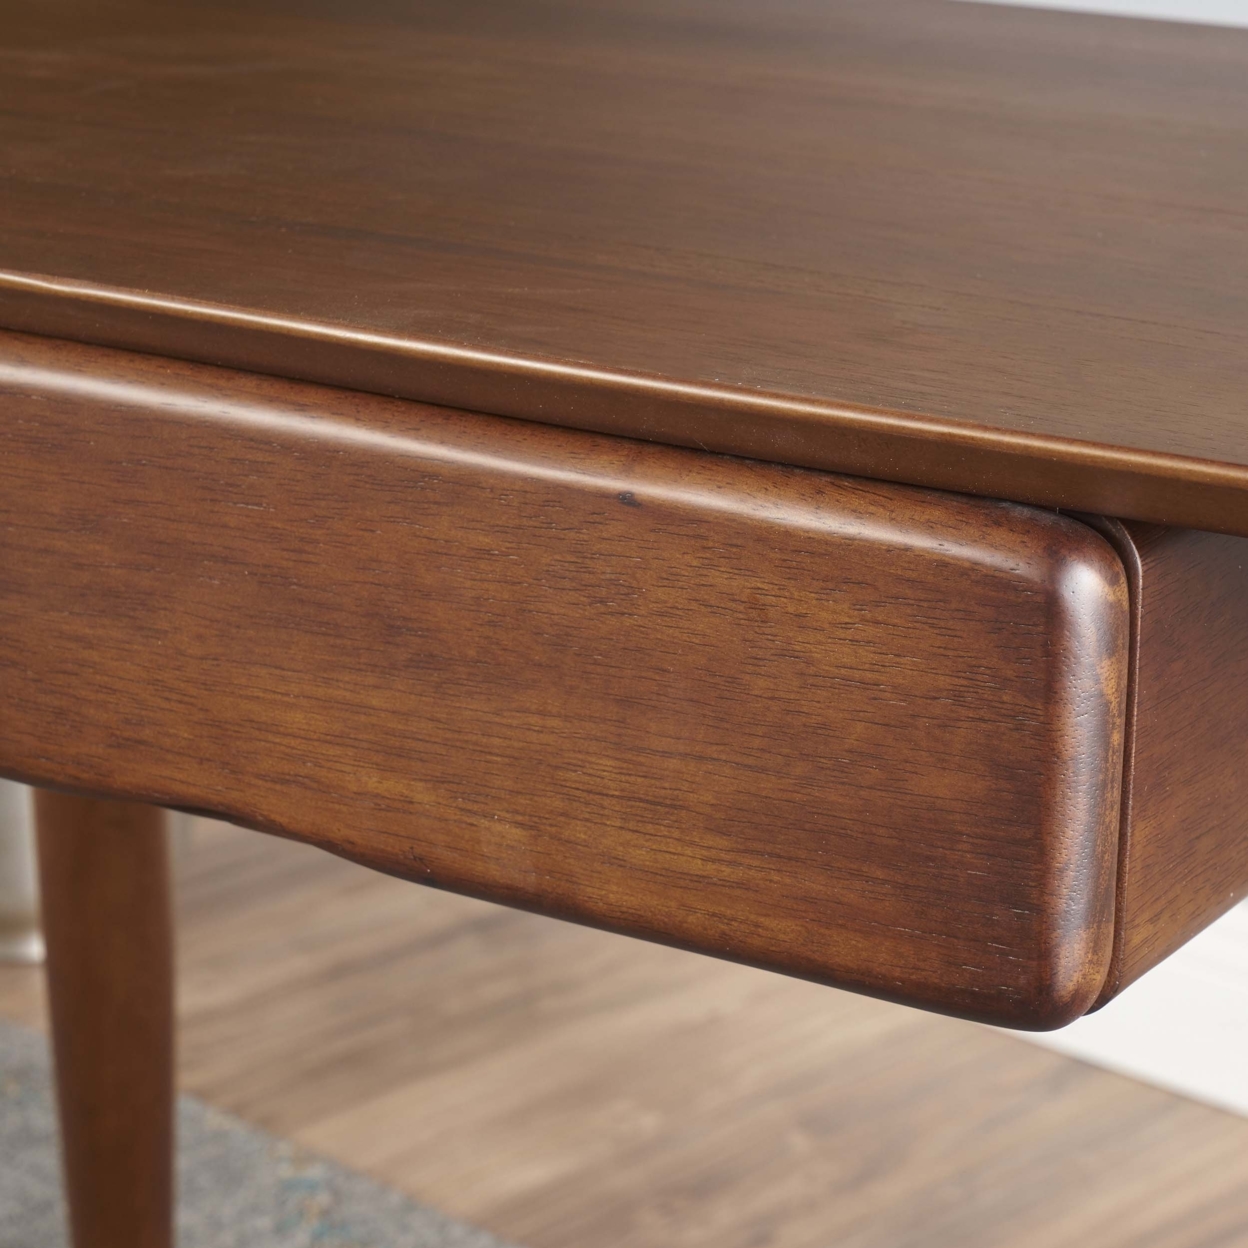 Kidman Wood Study Table With Faux Wood Overlay - Walnut